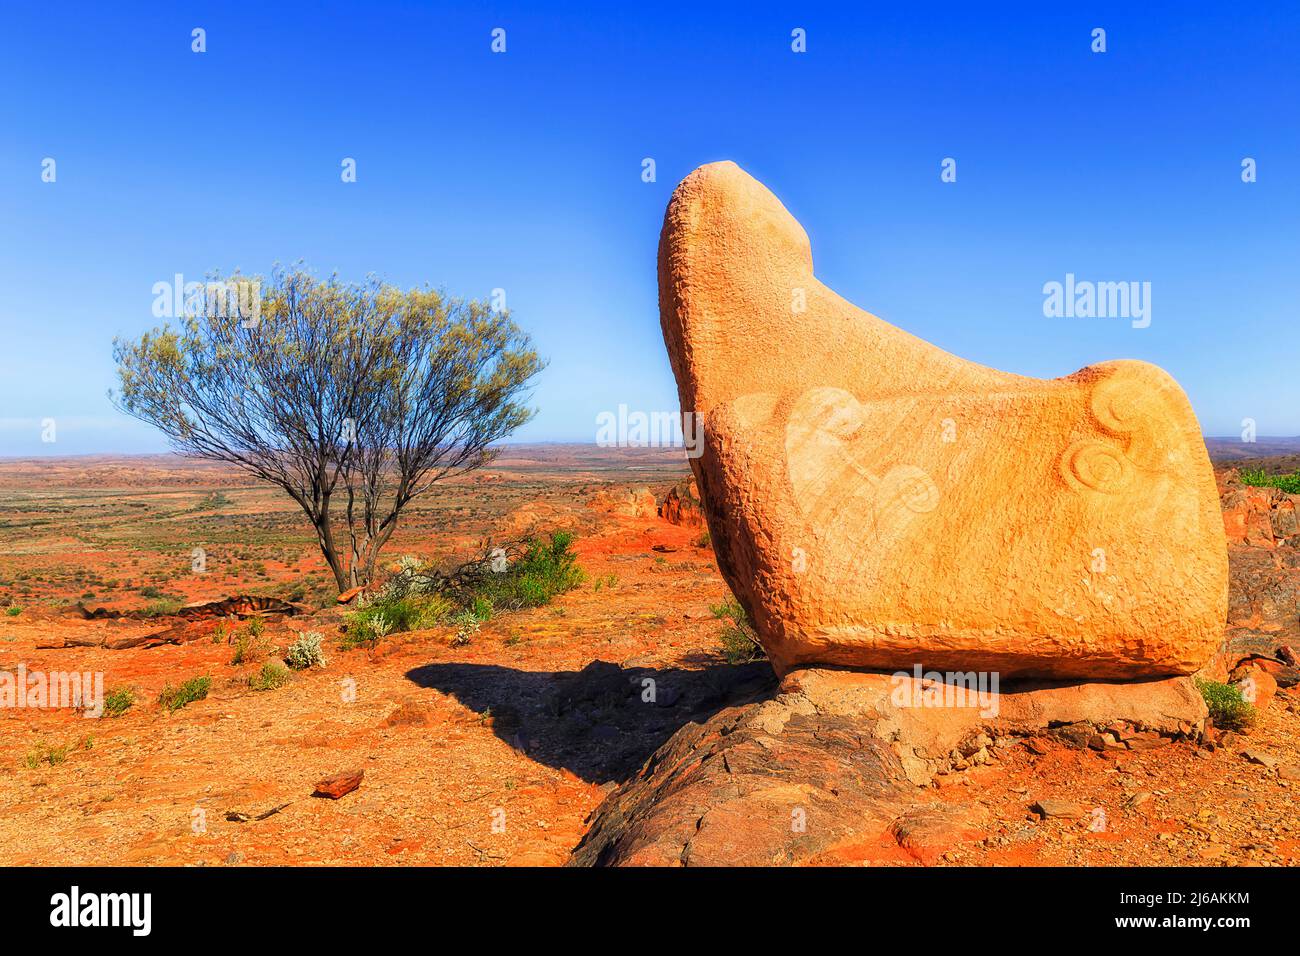 Seal shape sandstone rock sculpture in public park of Broken Hill silver city, Australian outback. Stock Photo